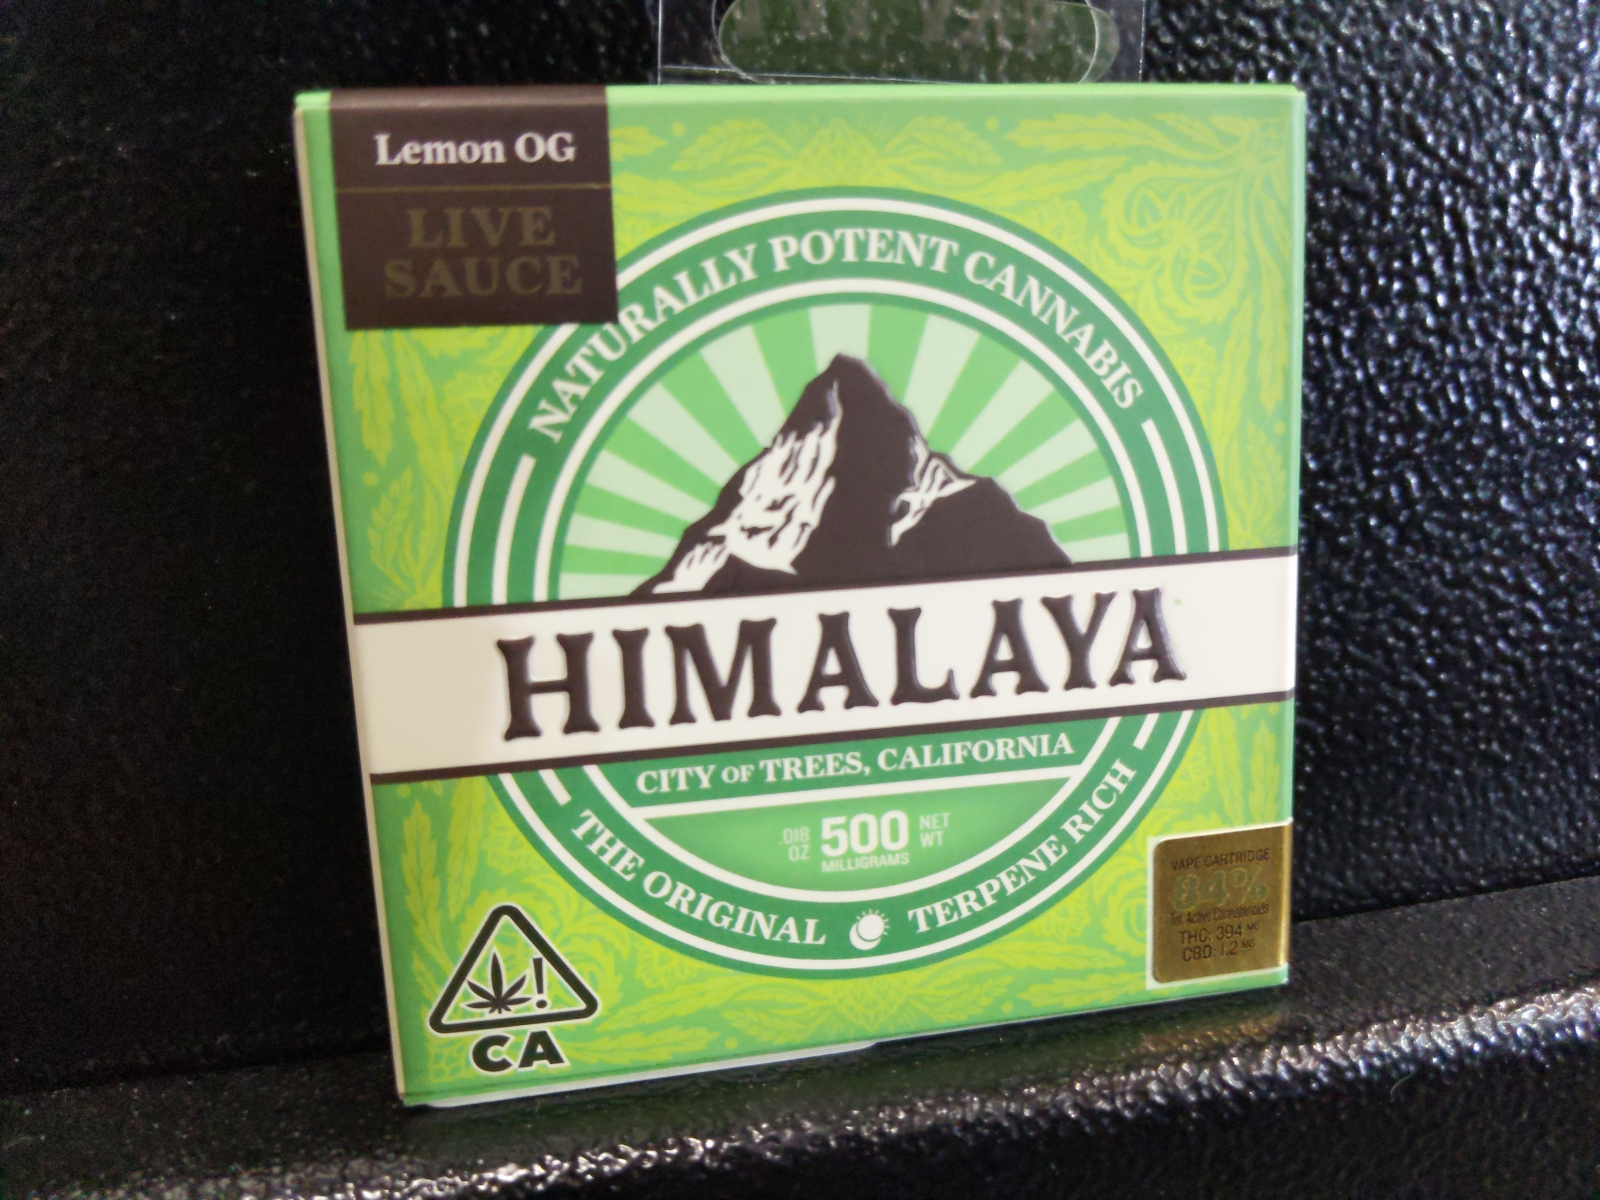 Himalaya .5g Cartridge:Hybrid (Live Sauce)- Lemon OG